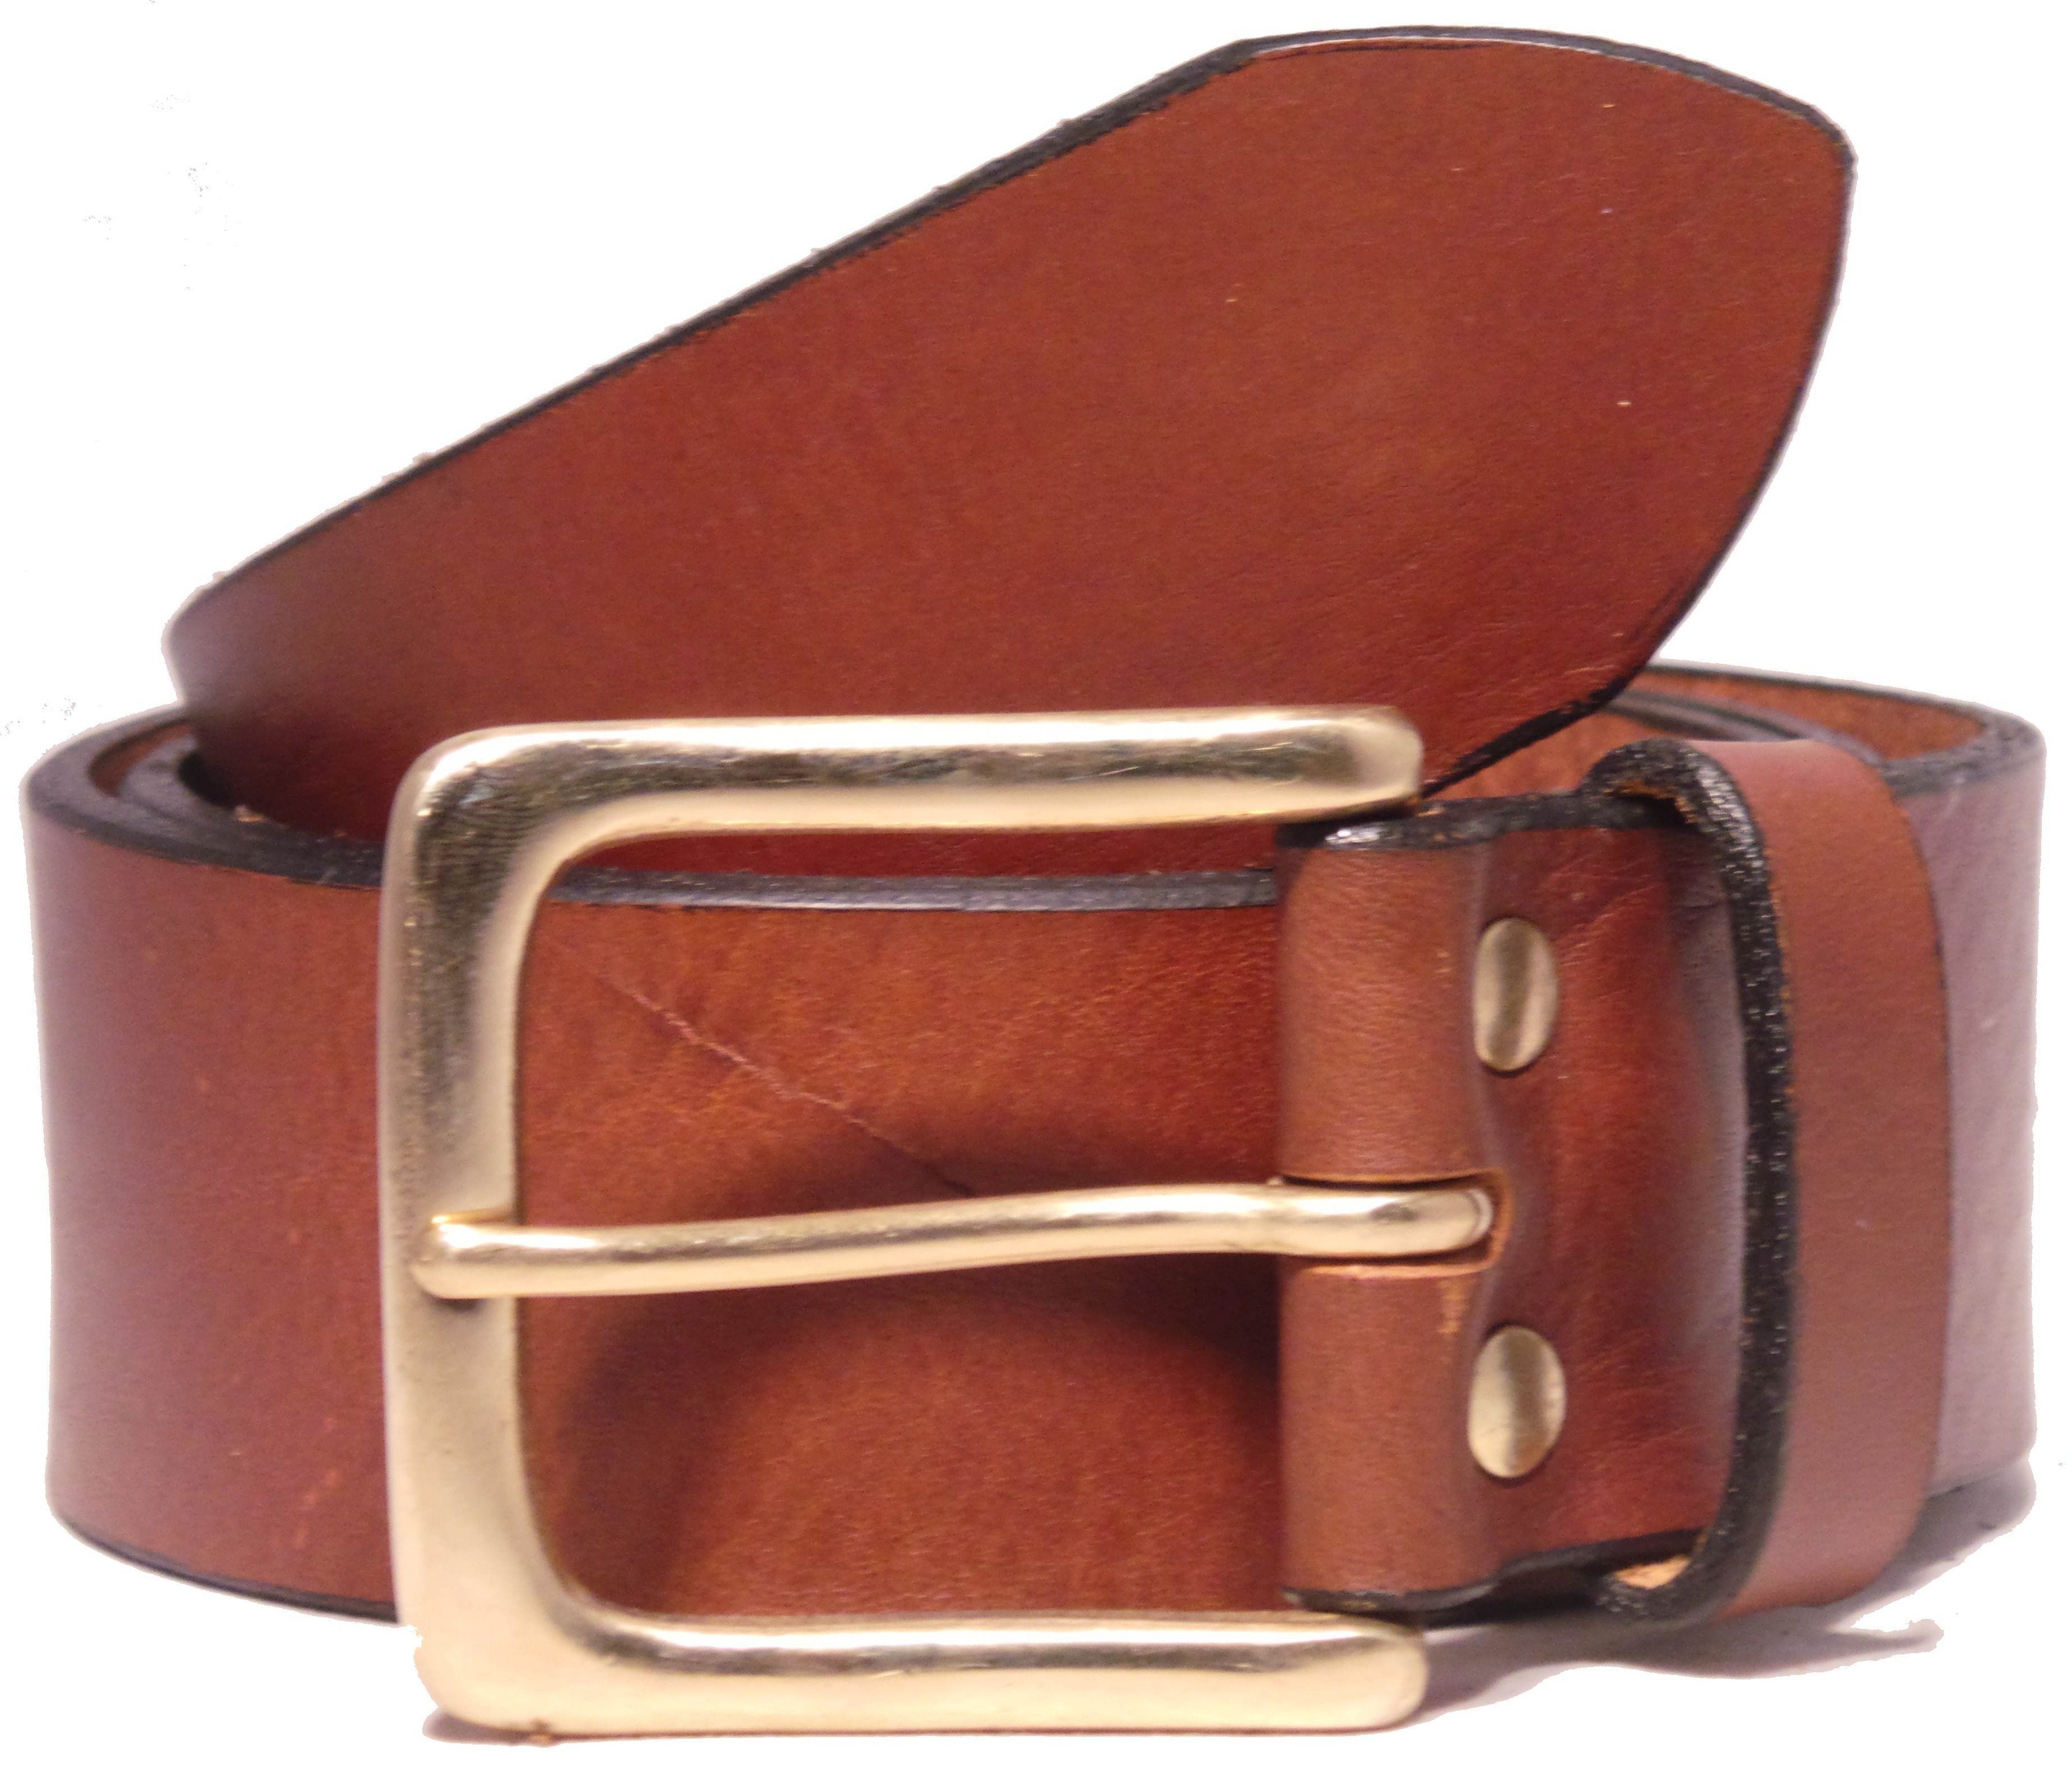 Buy Excutive Men's Leather Belt (Brown, 32) at